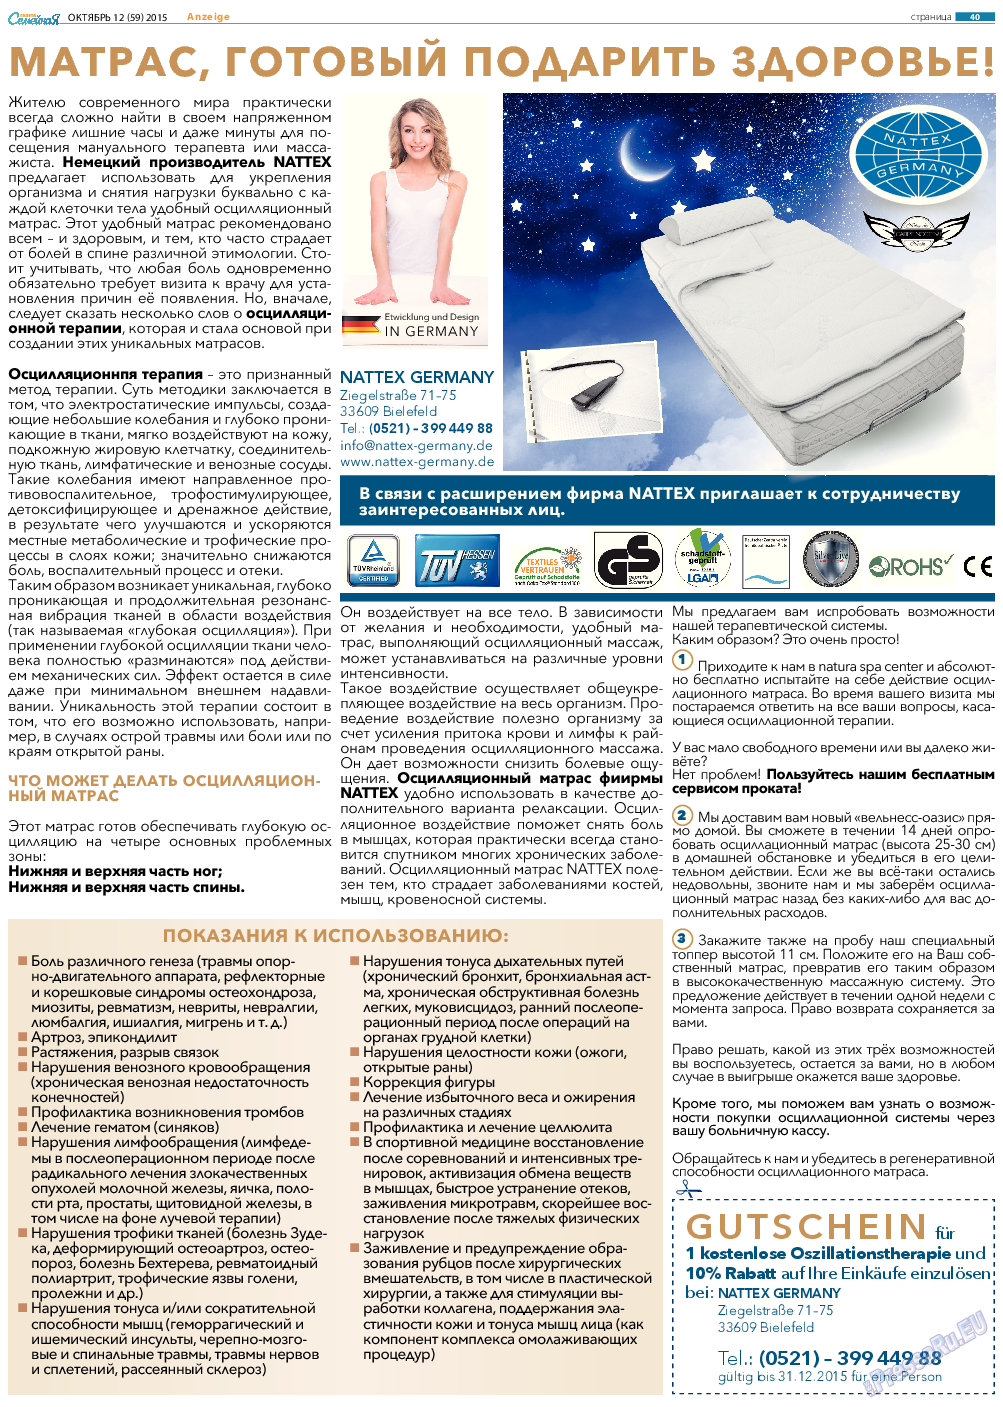 Семейная газета, газета. 2015 №12 стр.40